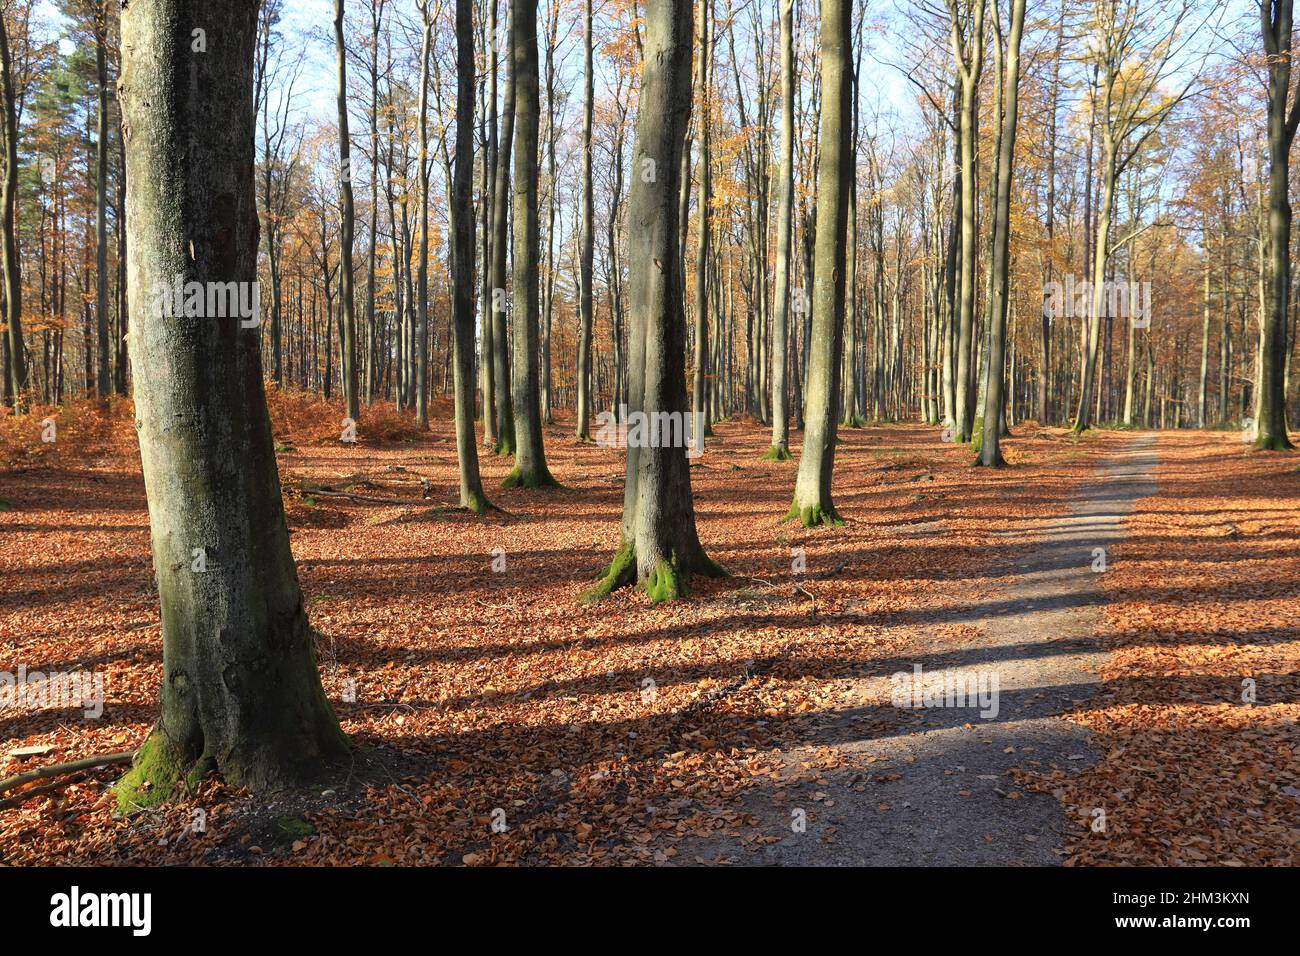 Pathway through the autumn forest Stock Photo